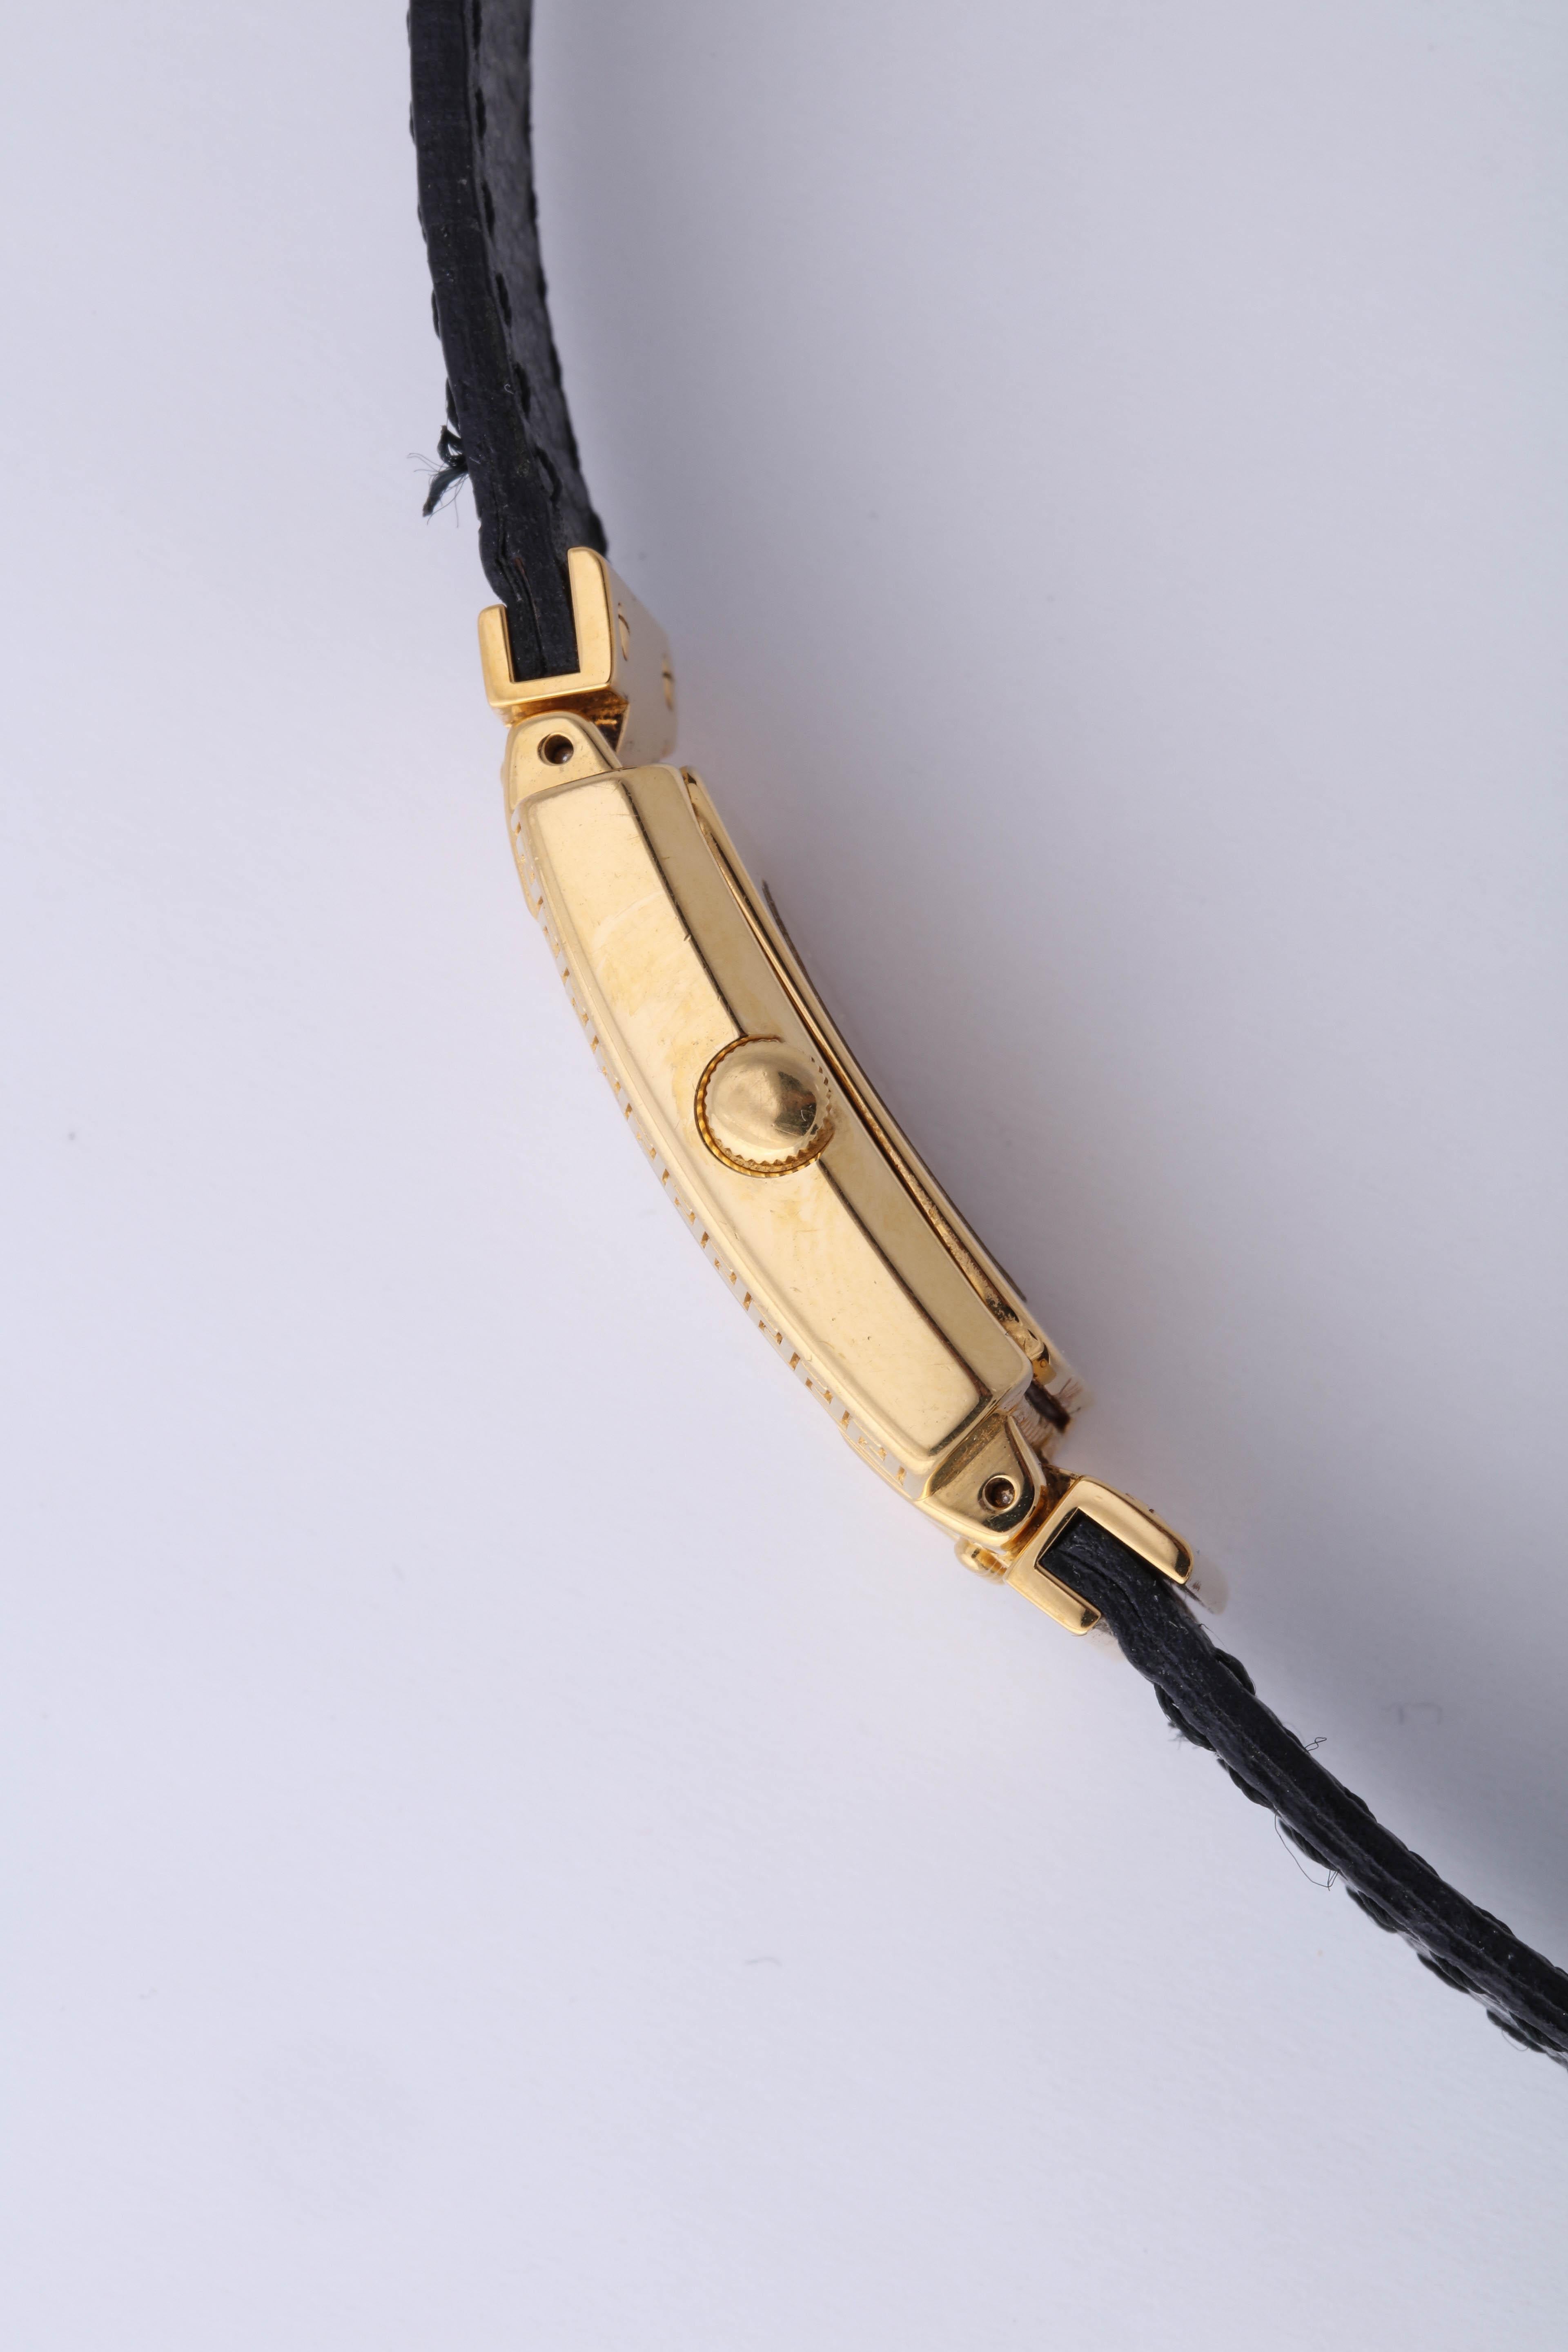 versace watch belt